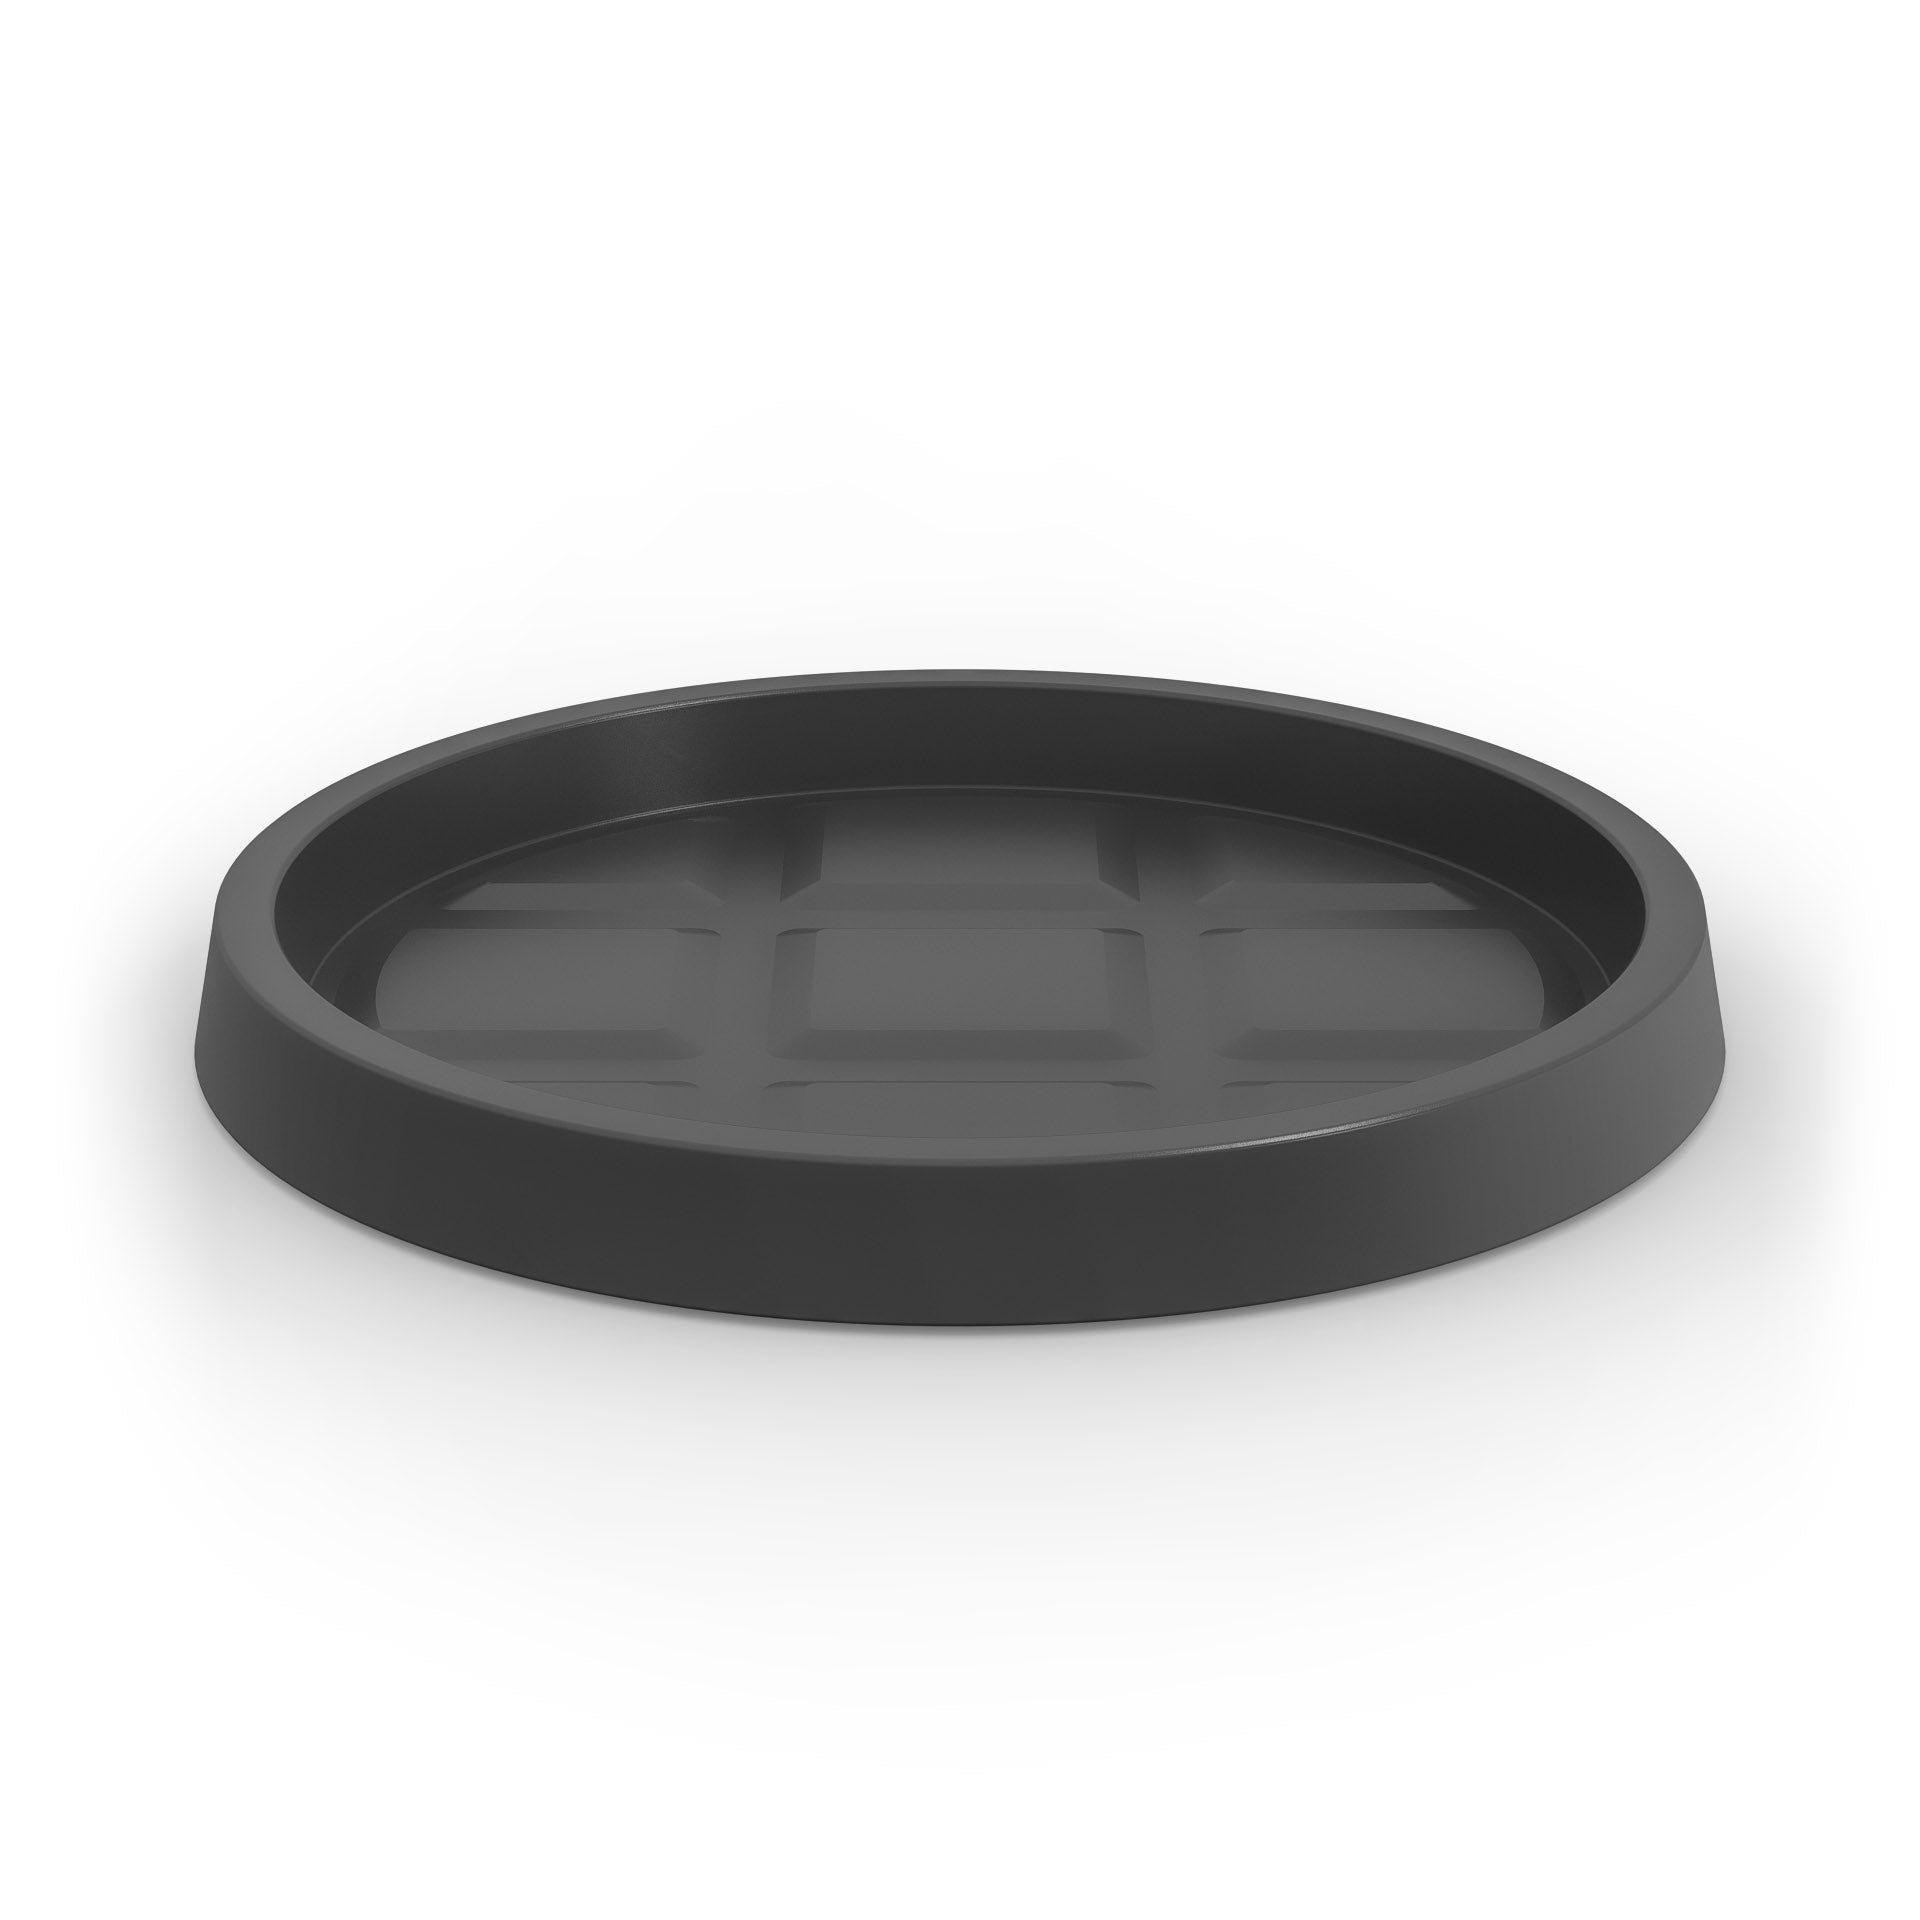 A dark grey saucer for Modscene planters pots. NZ made.